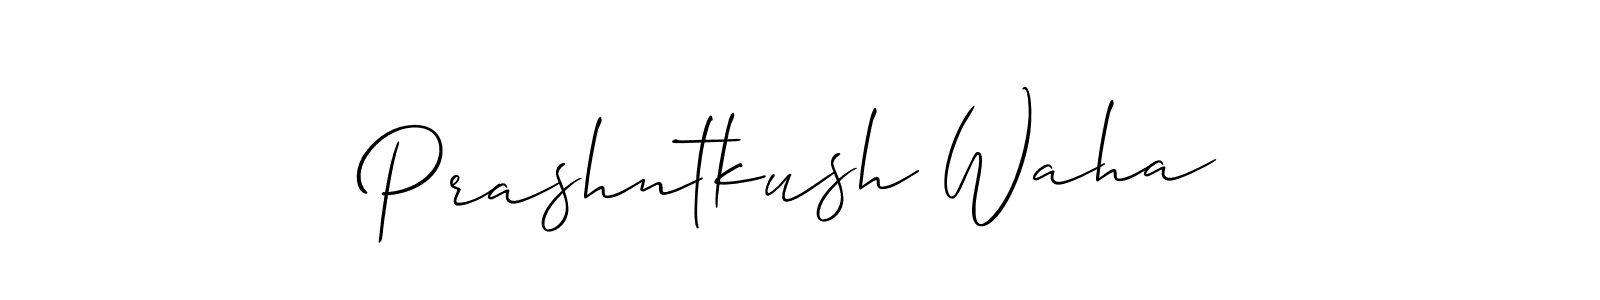 How to make Prashntkush Waha signature? Allison_Script is a professional autograph style. Create handwritten signature for Prashntkush Waha name. Prashntkush Waha signature style 2 images and pictures png